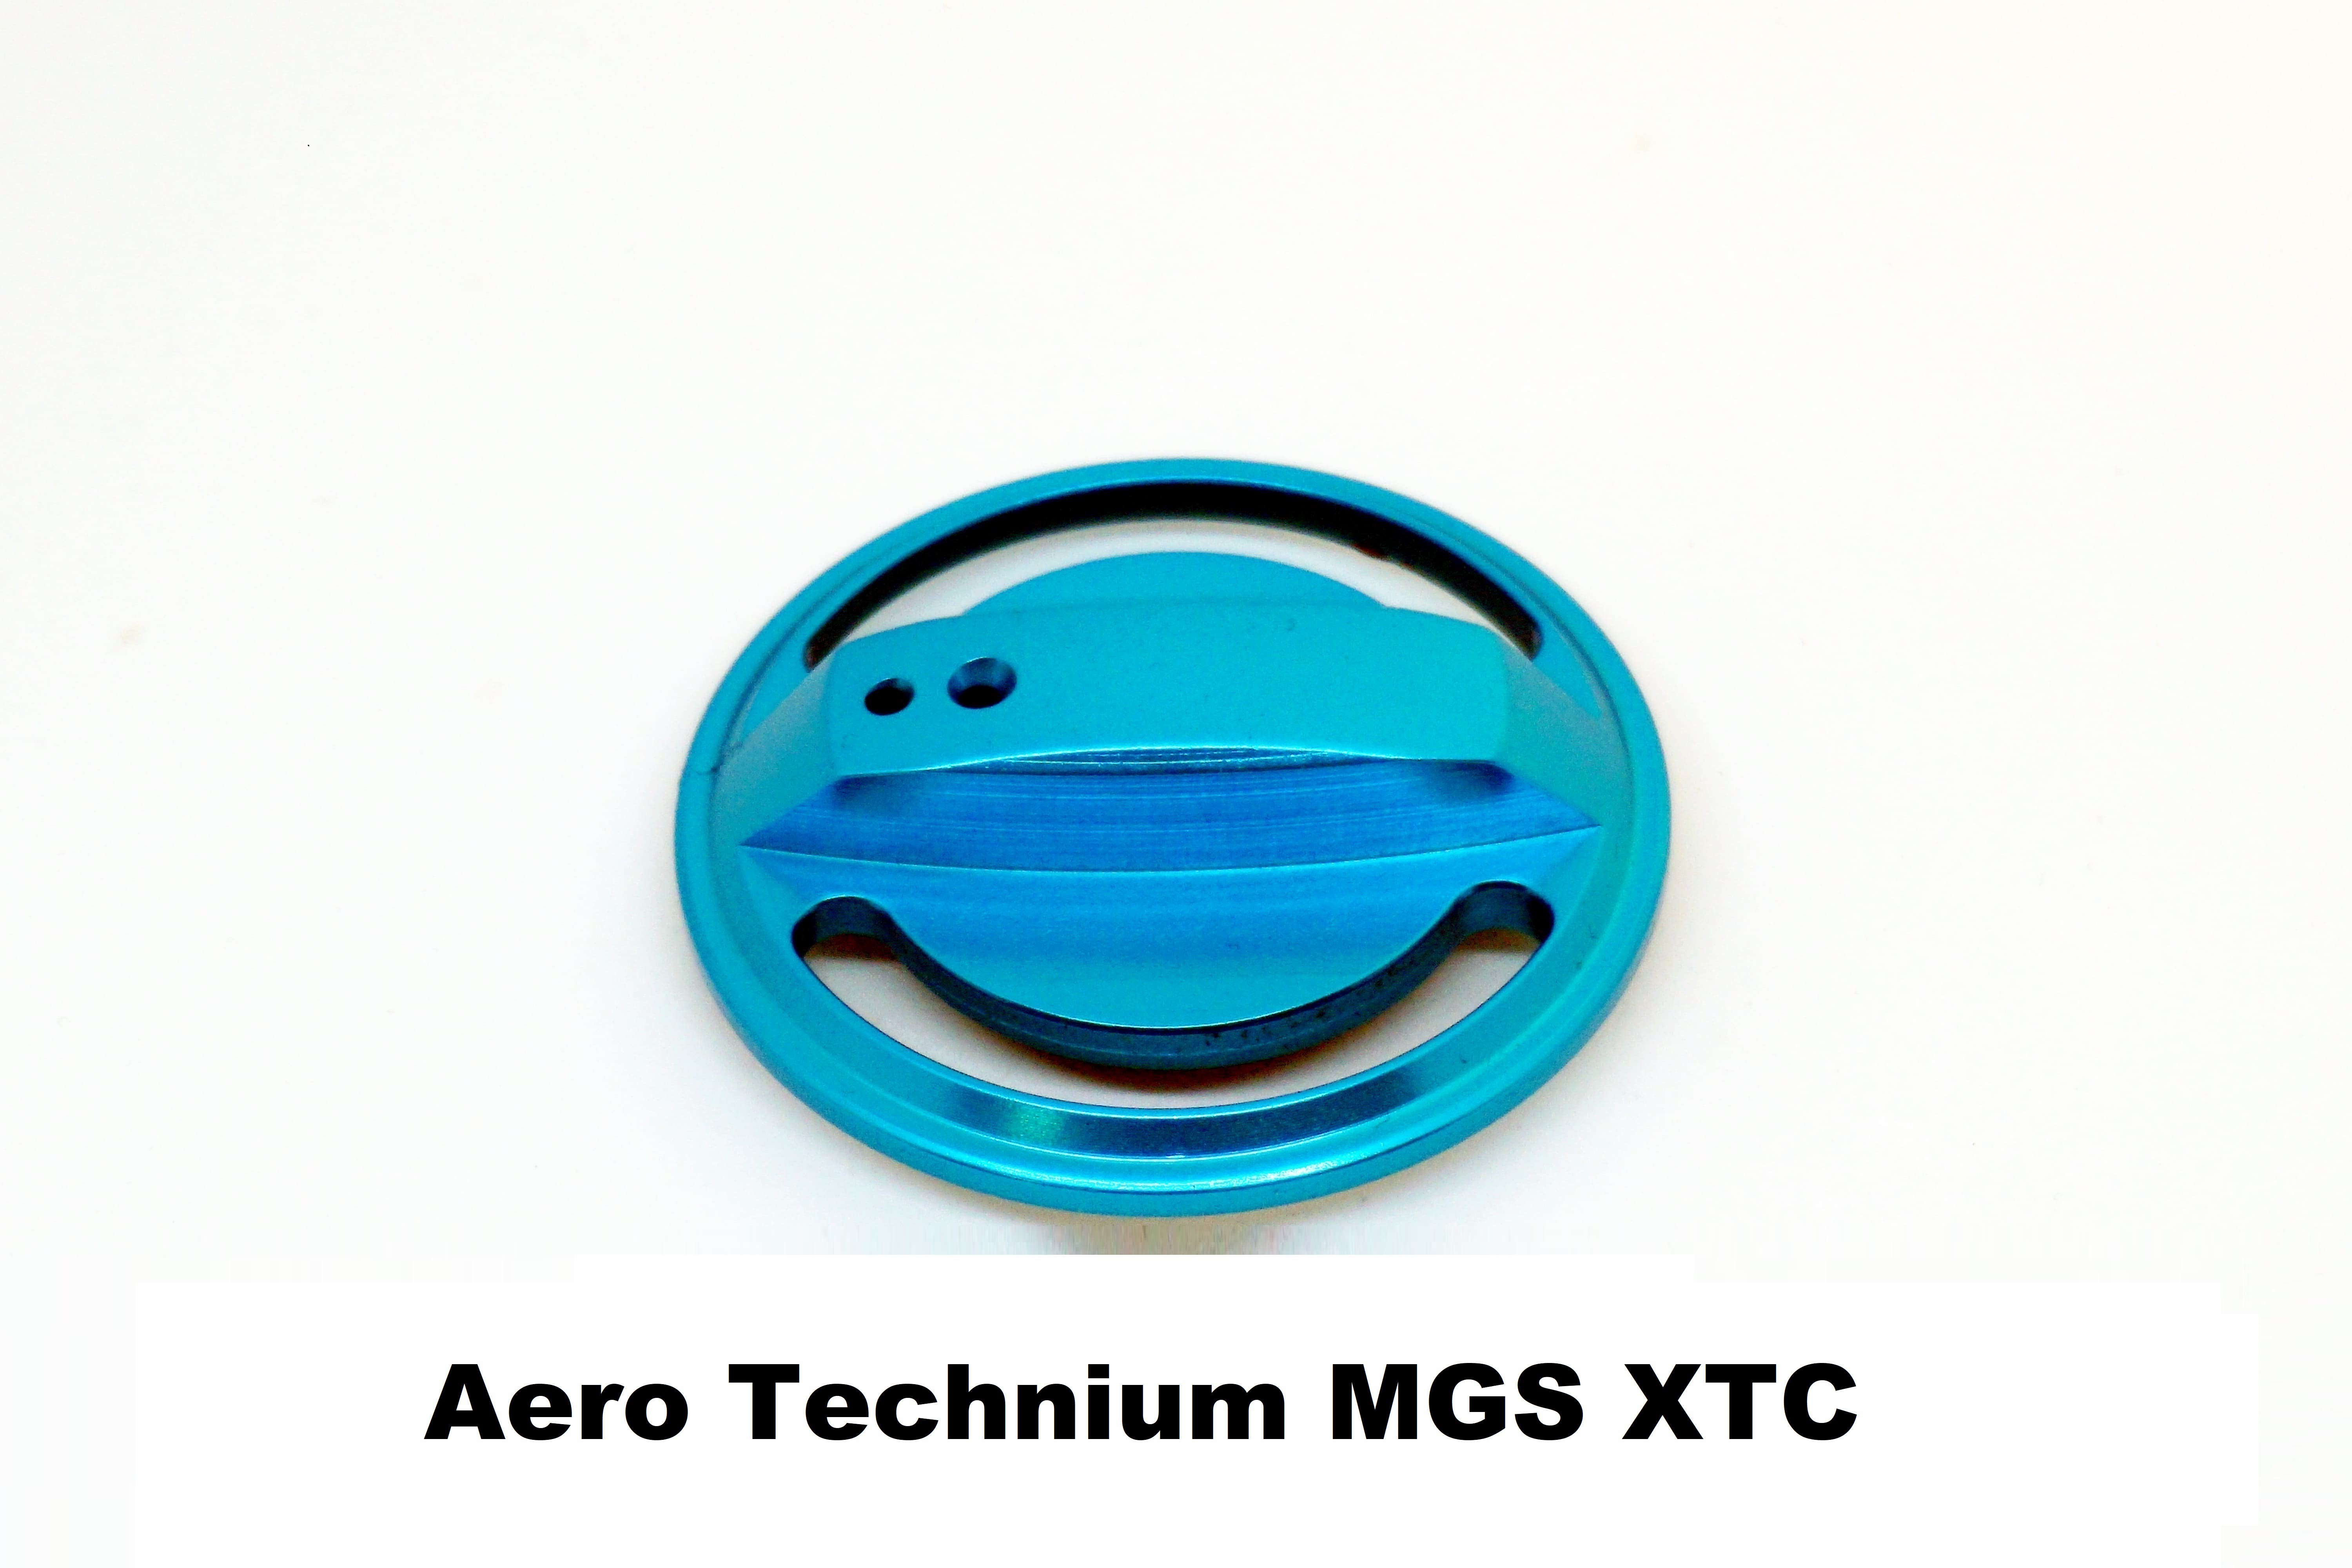 Spina del Freno Aero Technium MGS XTC